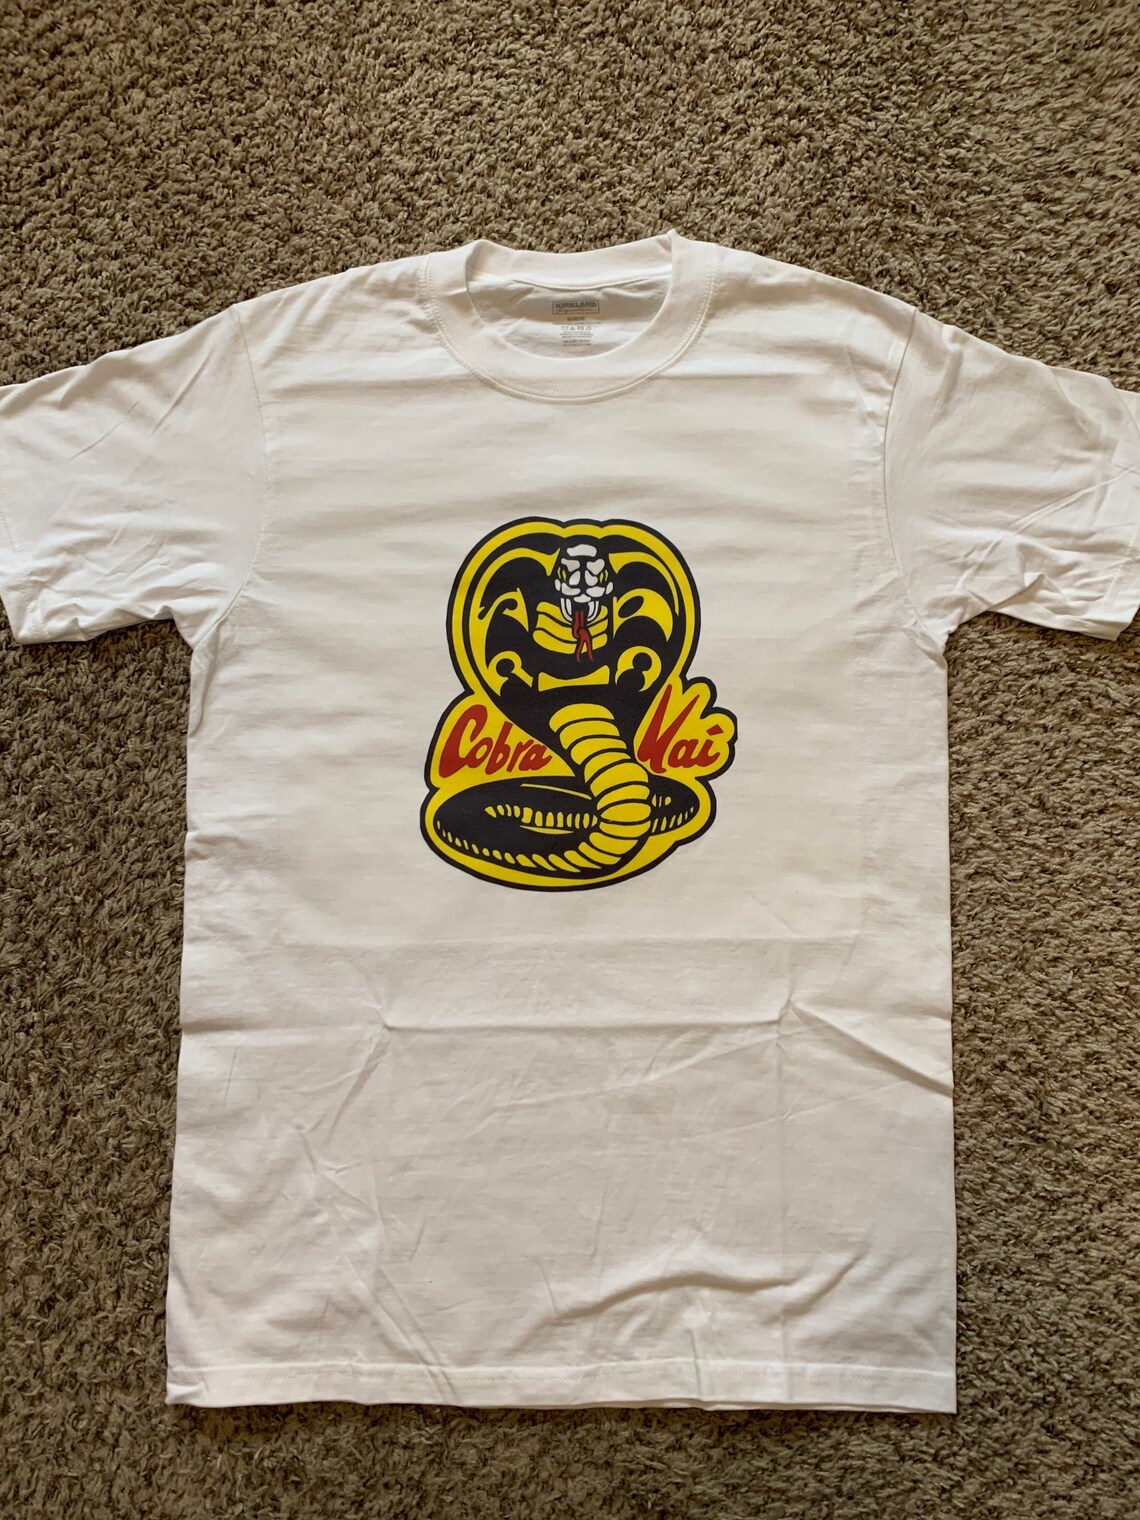 Cobra Kai Premium T Shirt in Mens Sizes S-3XL in Black or White Printed ...